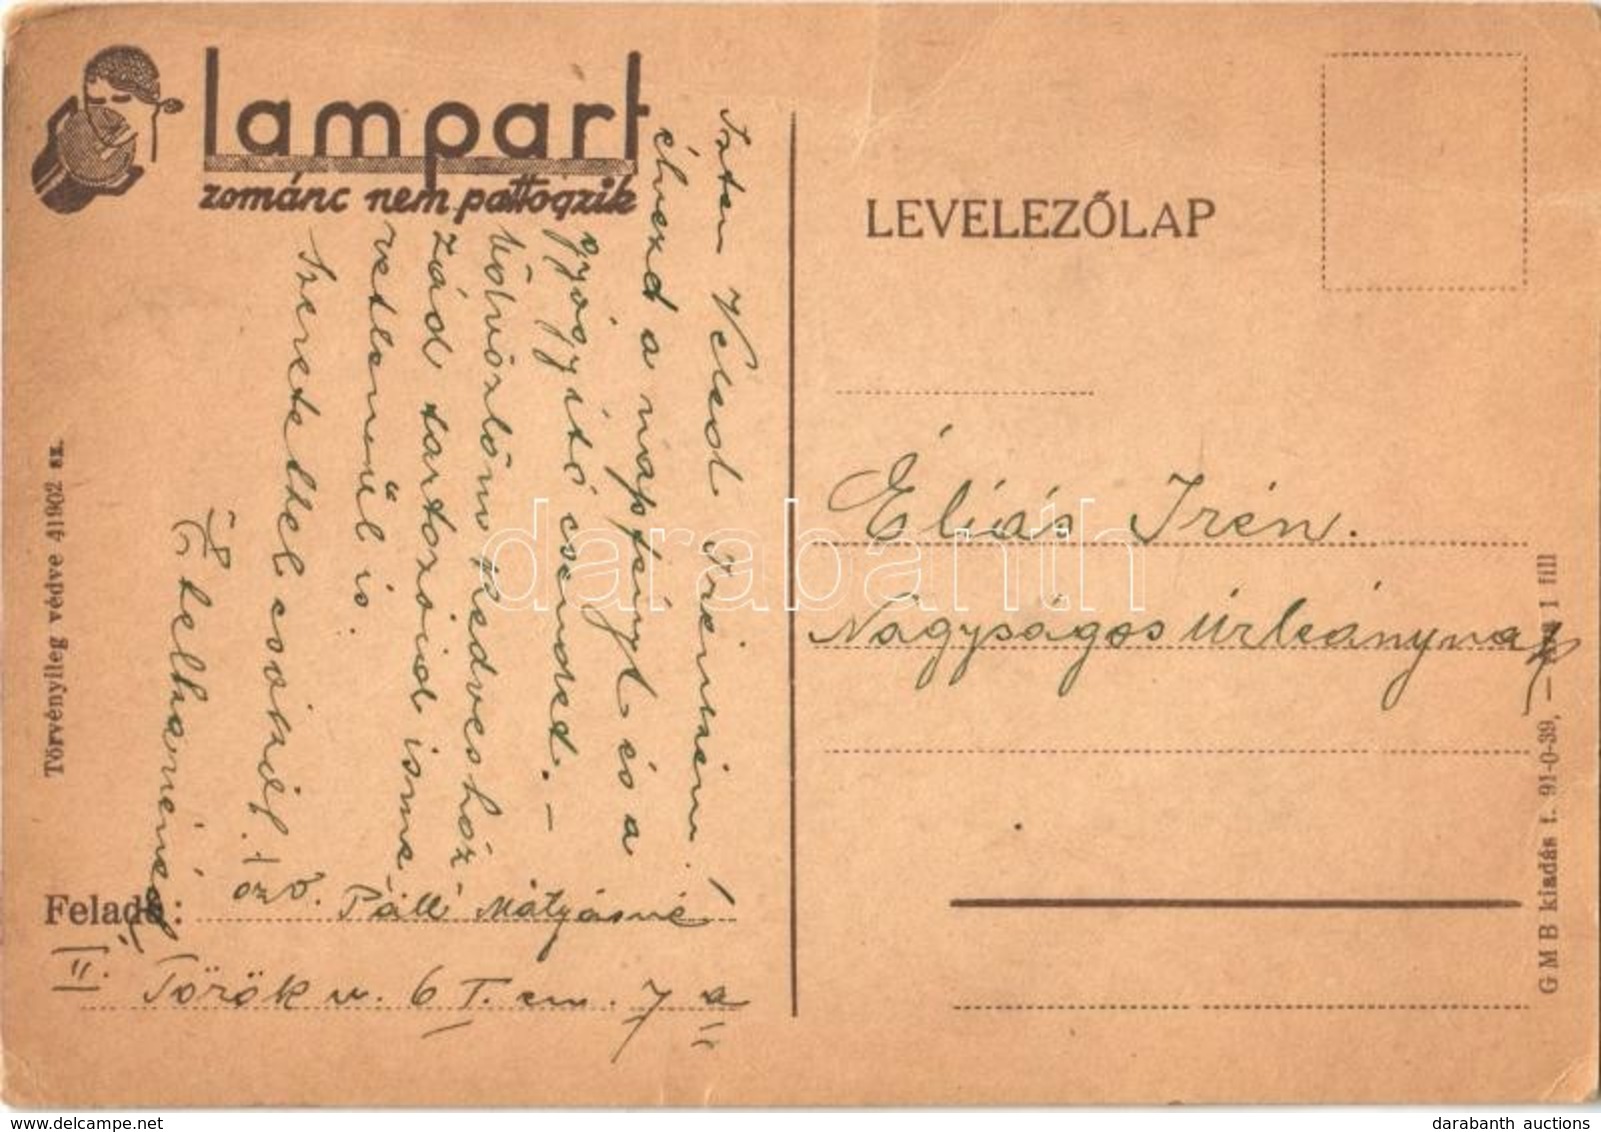 * T3 1934 Lampart Zománc Nem Pattogzik  /Hungarian Enamel Advertisement Card (fa) - Unclassified